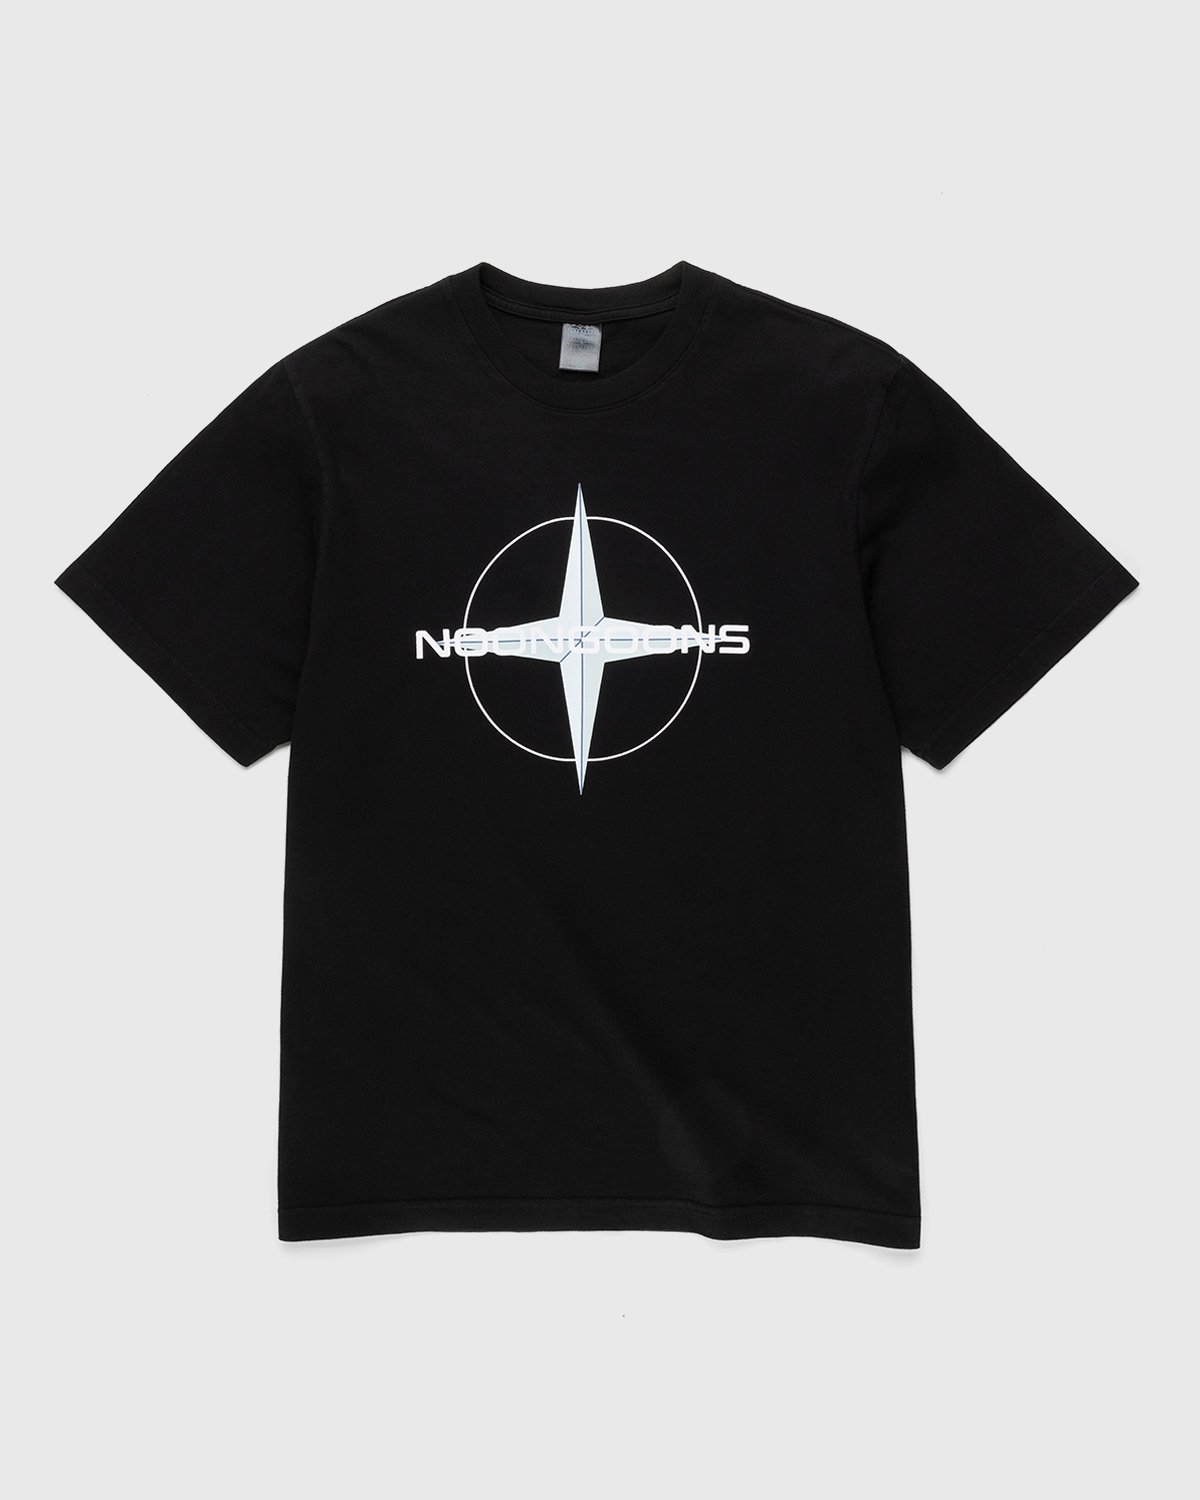 Noon Goons - Compass Tshirt Black - Clothing - Black - Image 1